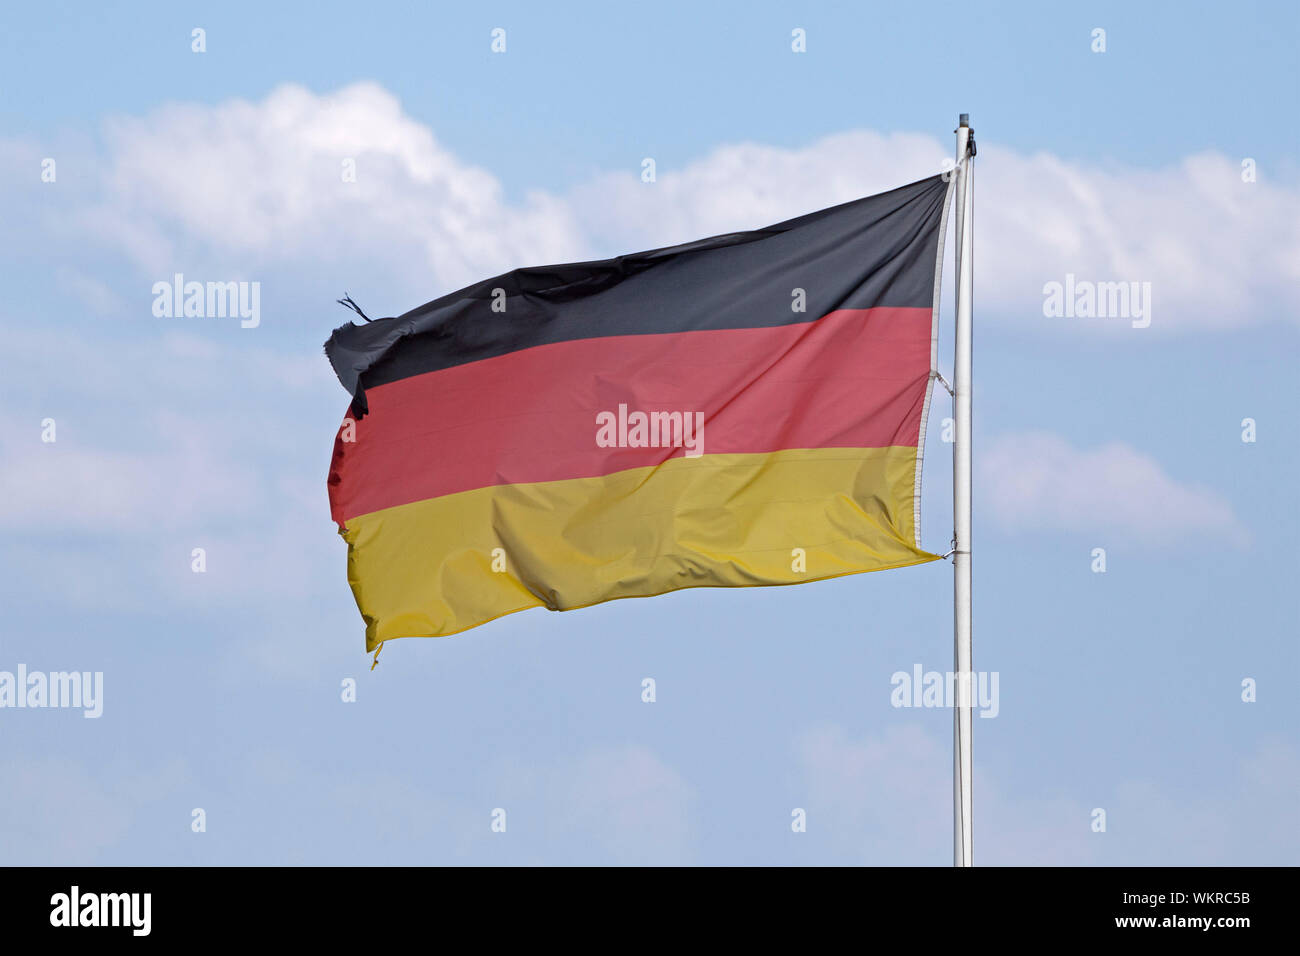 Bundesflagge, Deutschland | German flag, Germany Stock Photo